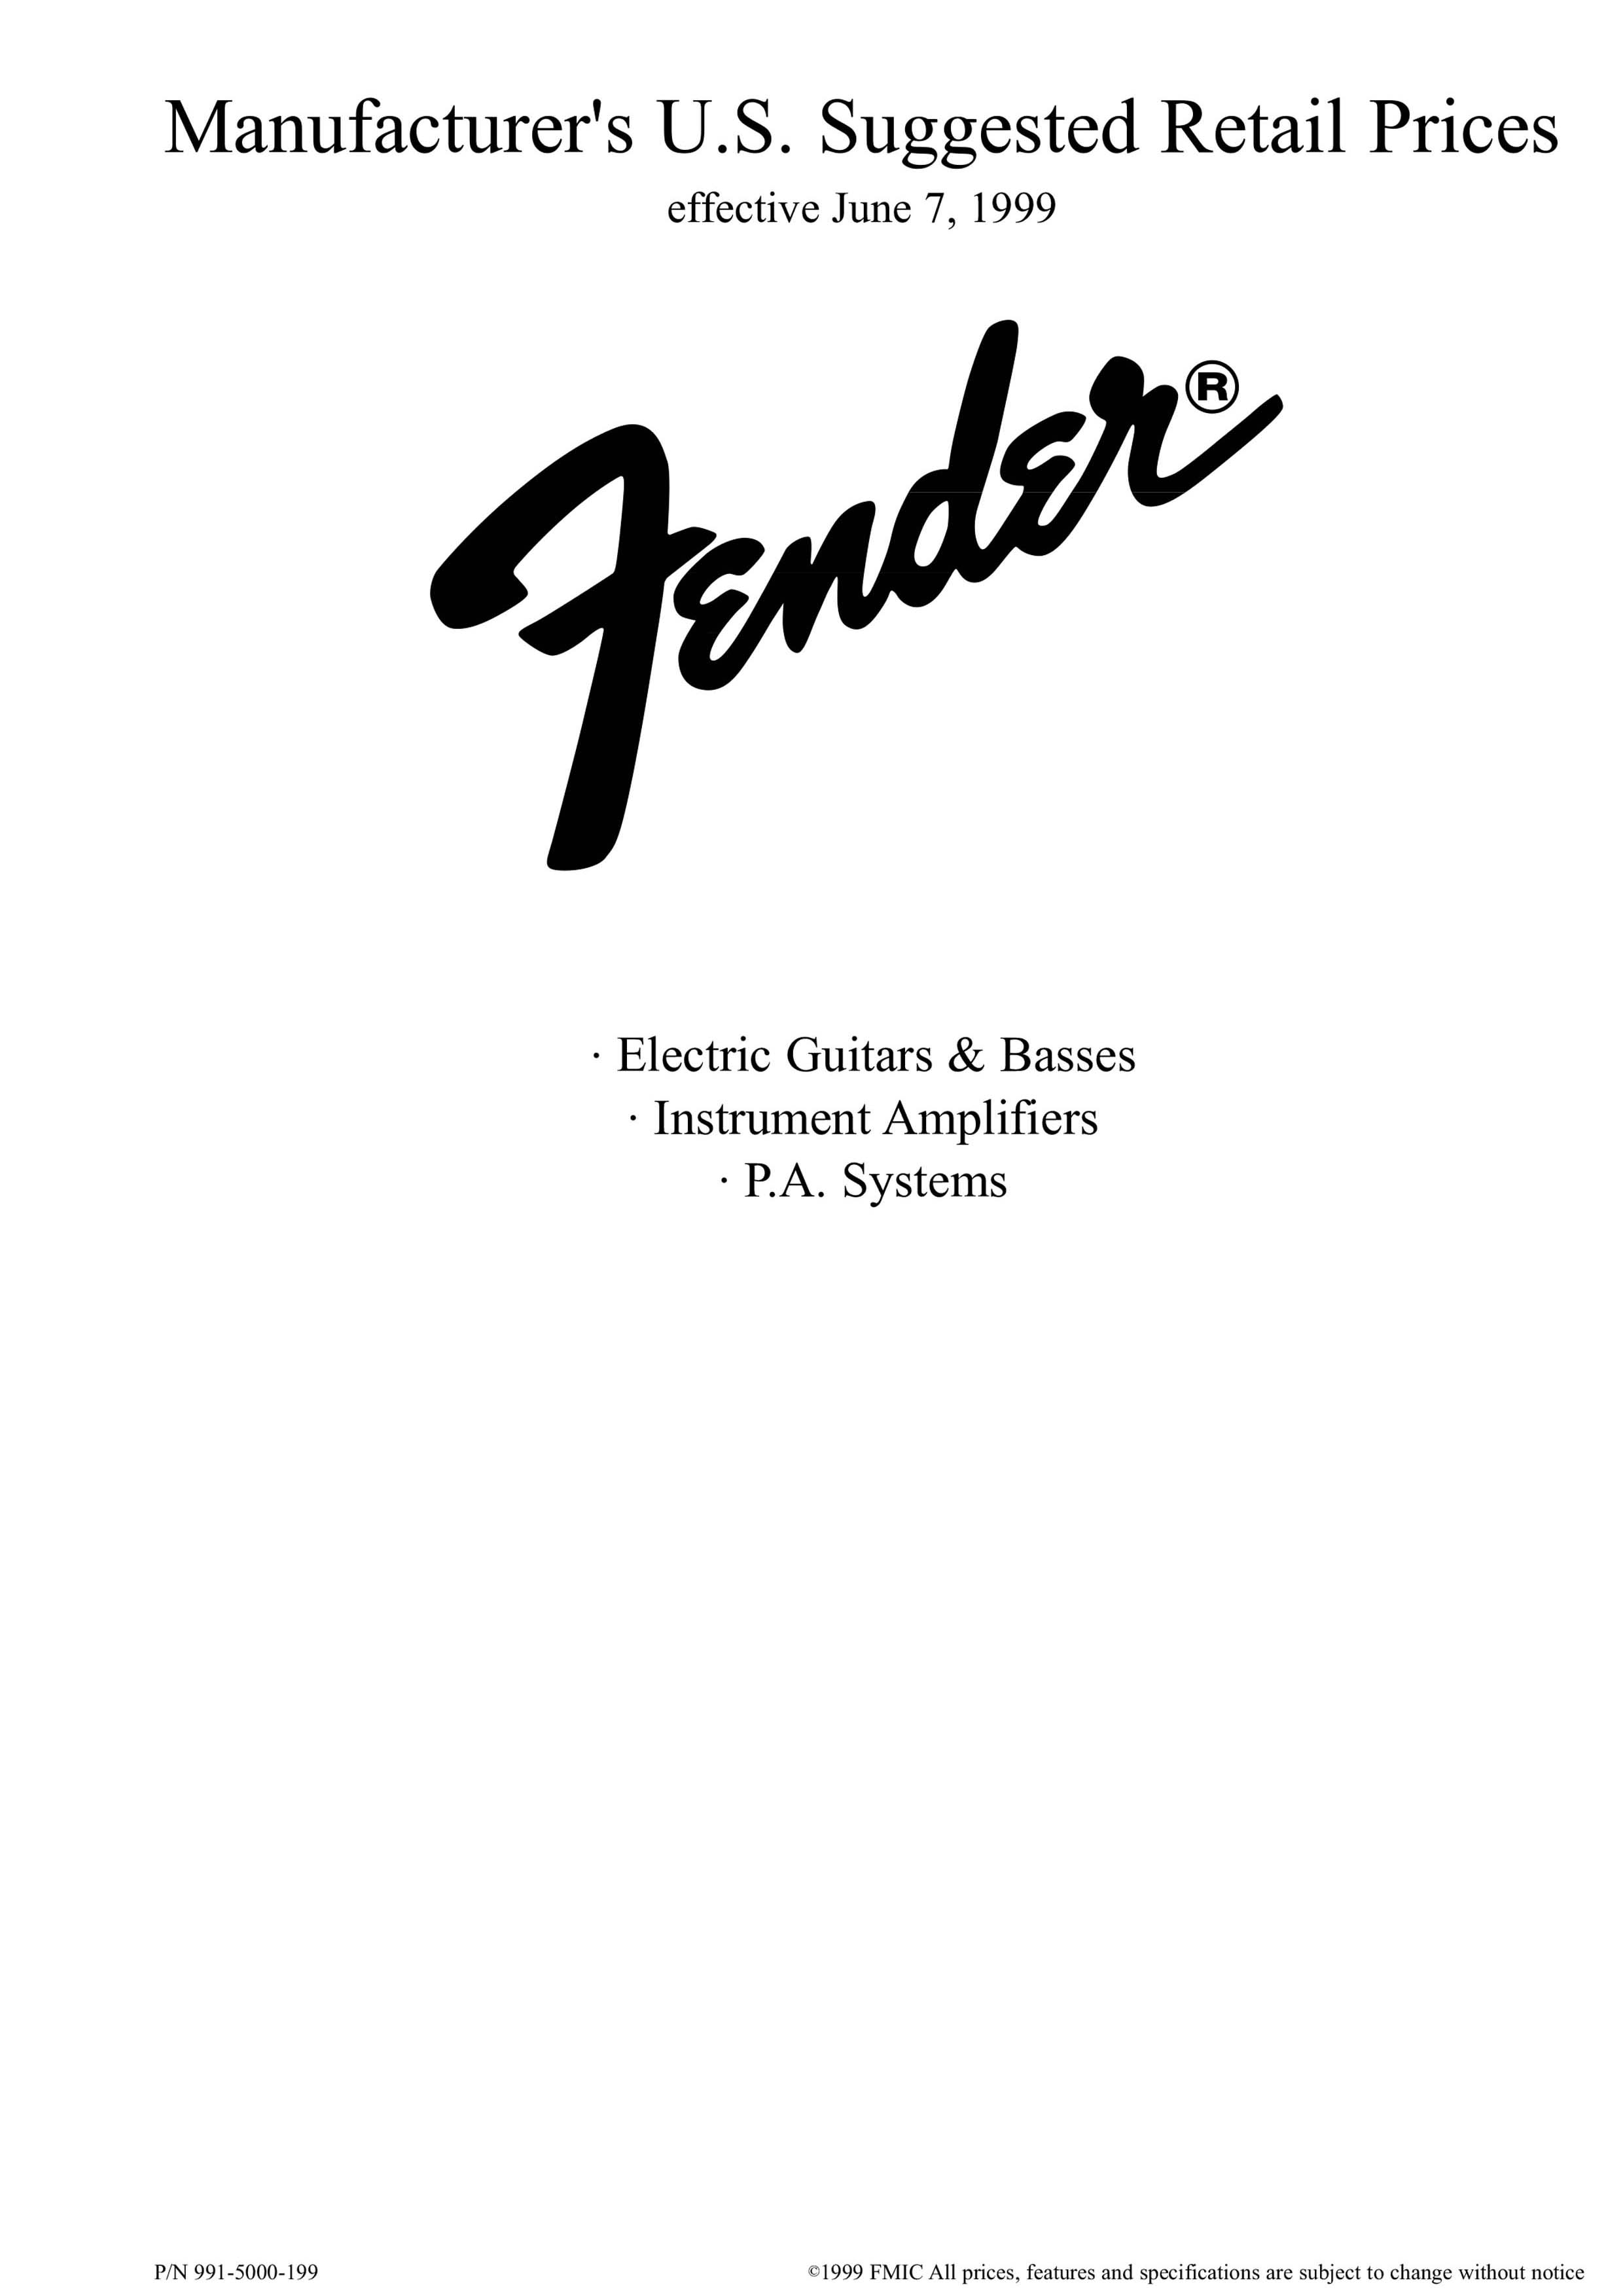 Fender Price list 1999